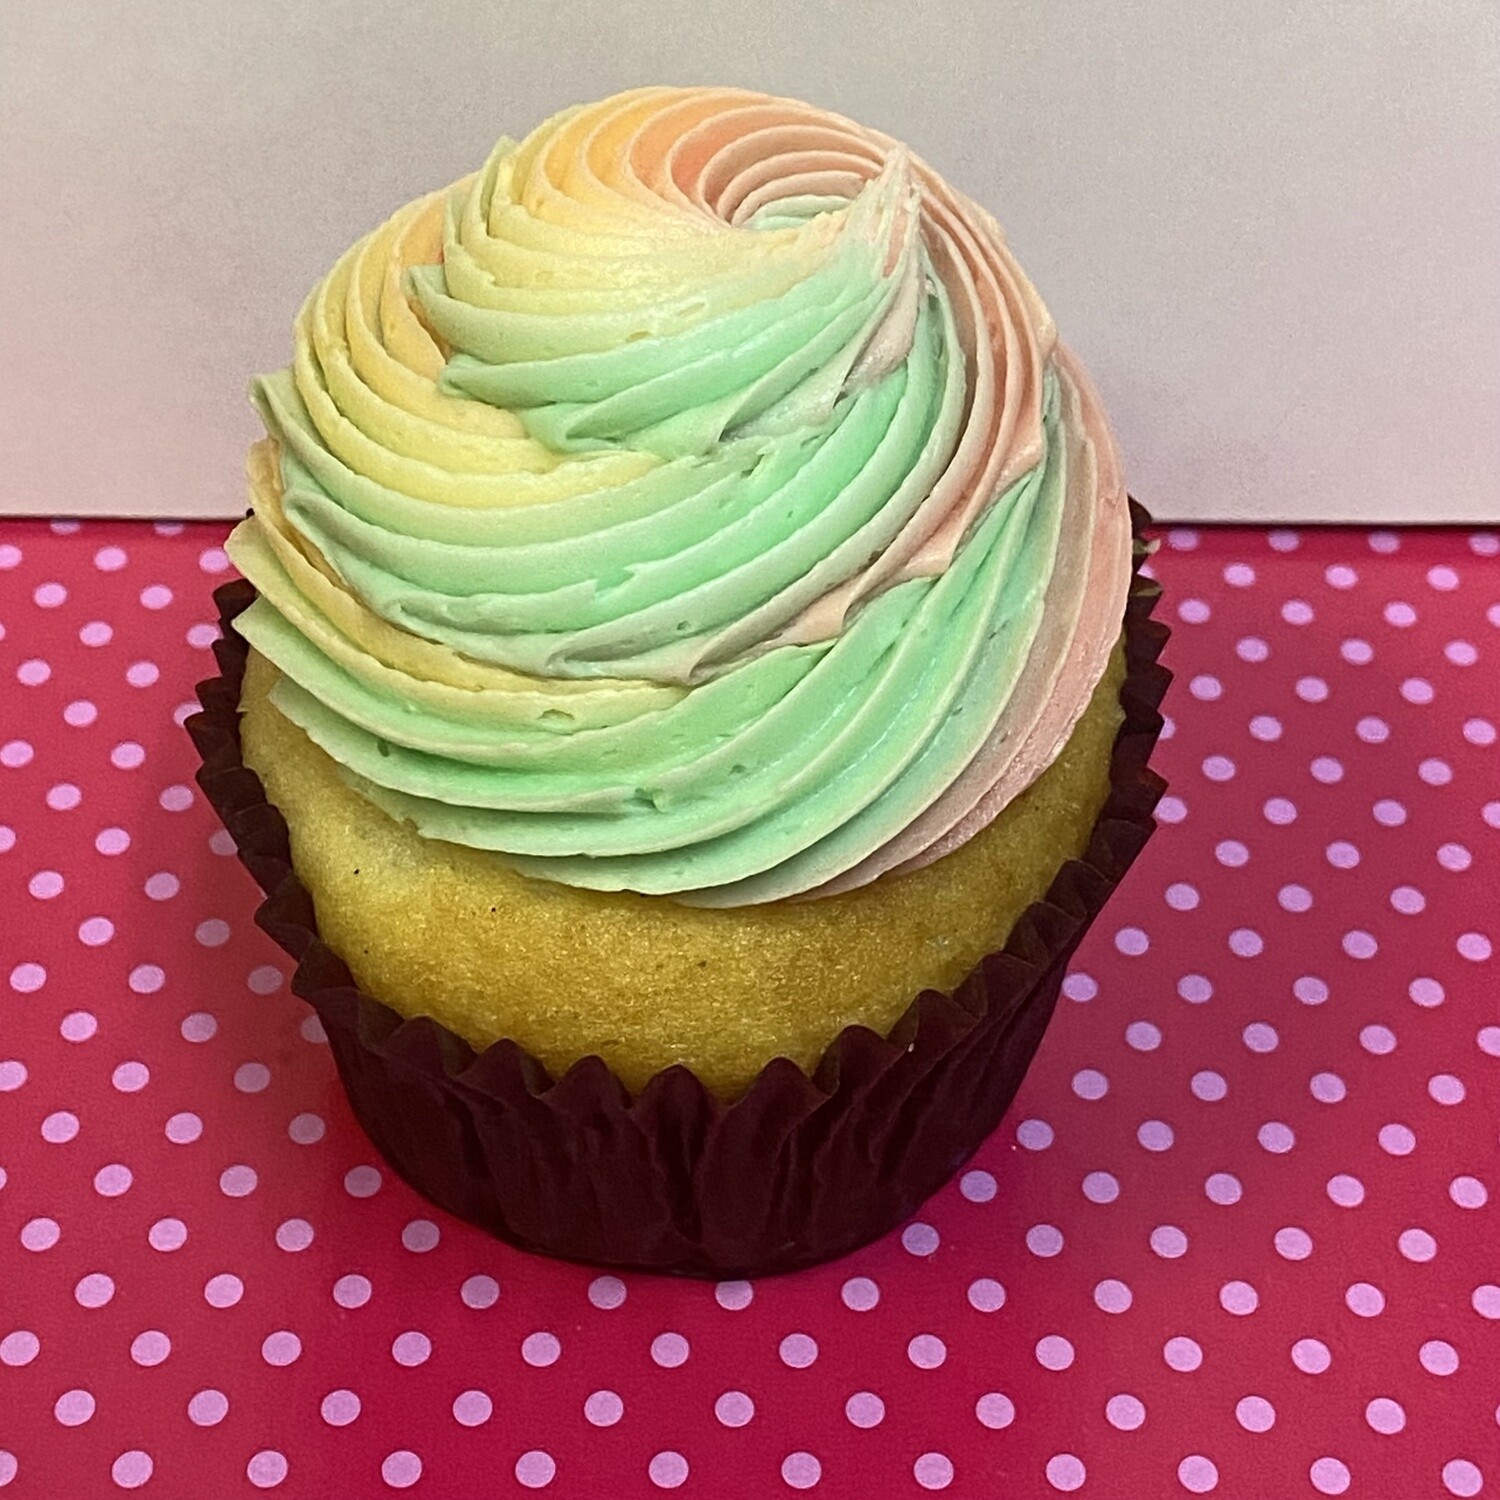 Rainbow Sherbet Cupcake - Wednesday